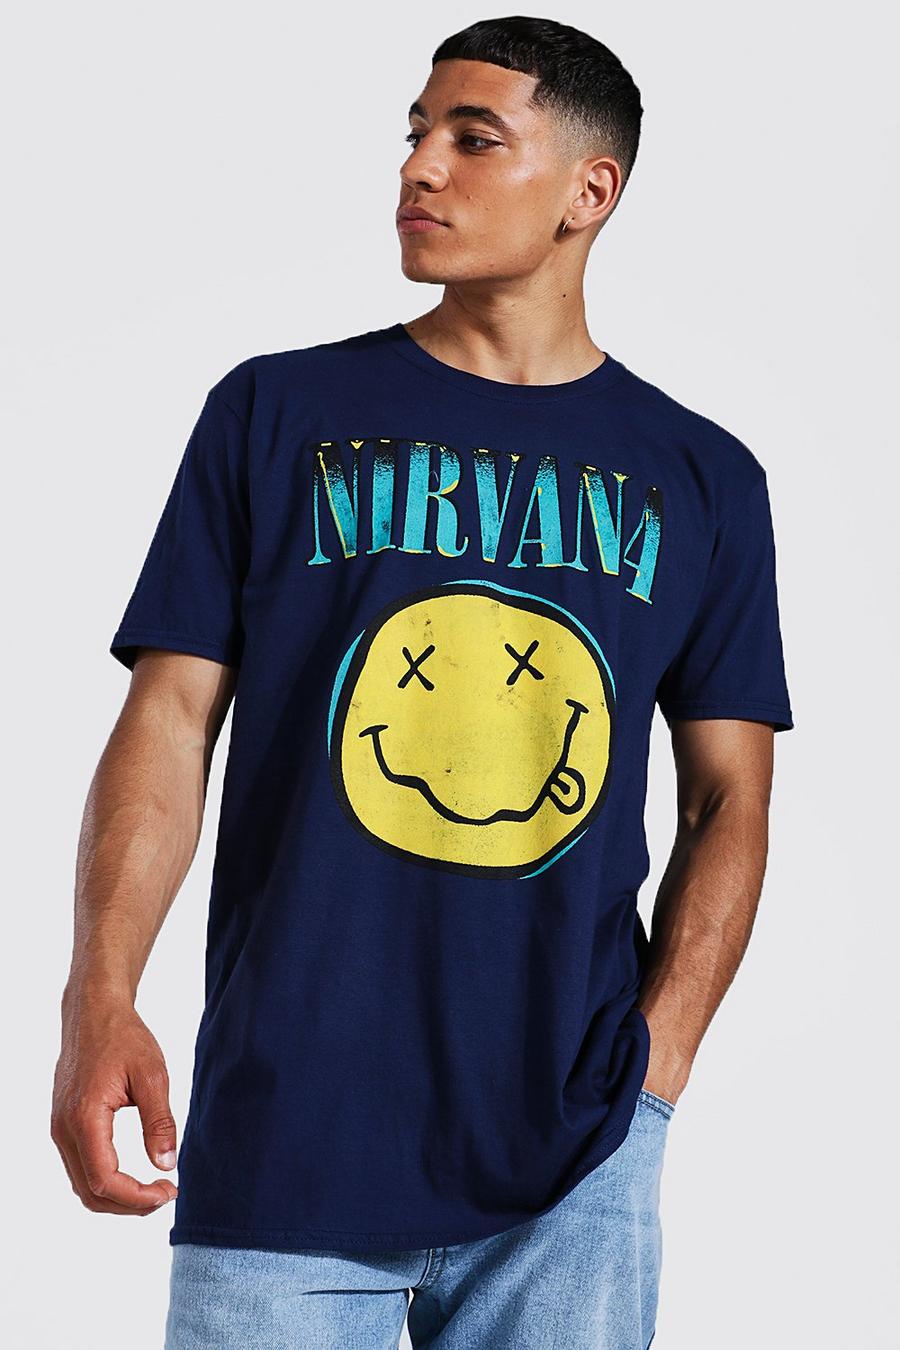 T-shirt oversize ufficiale con logo dei Nirvana, Navy azul marino image number 1